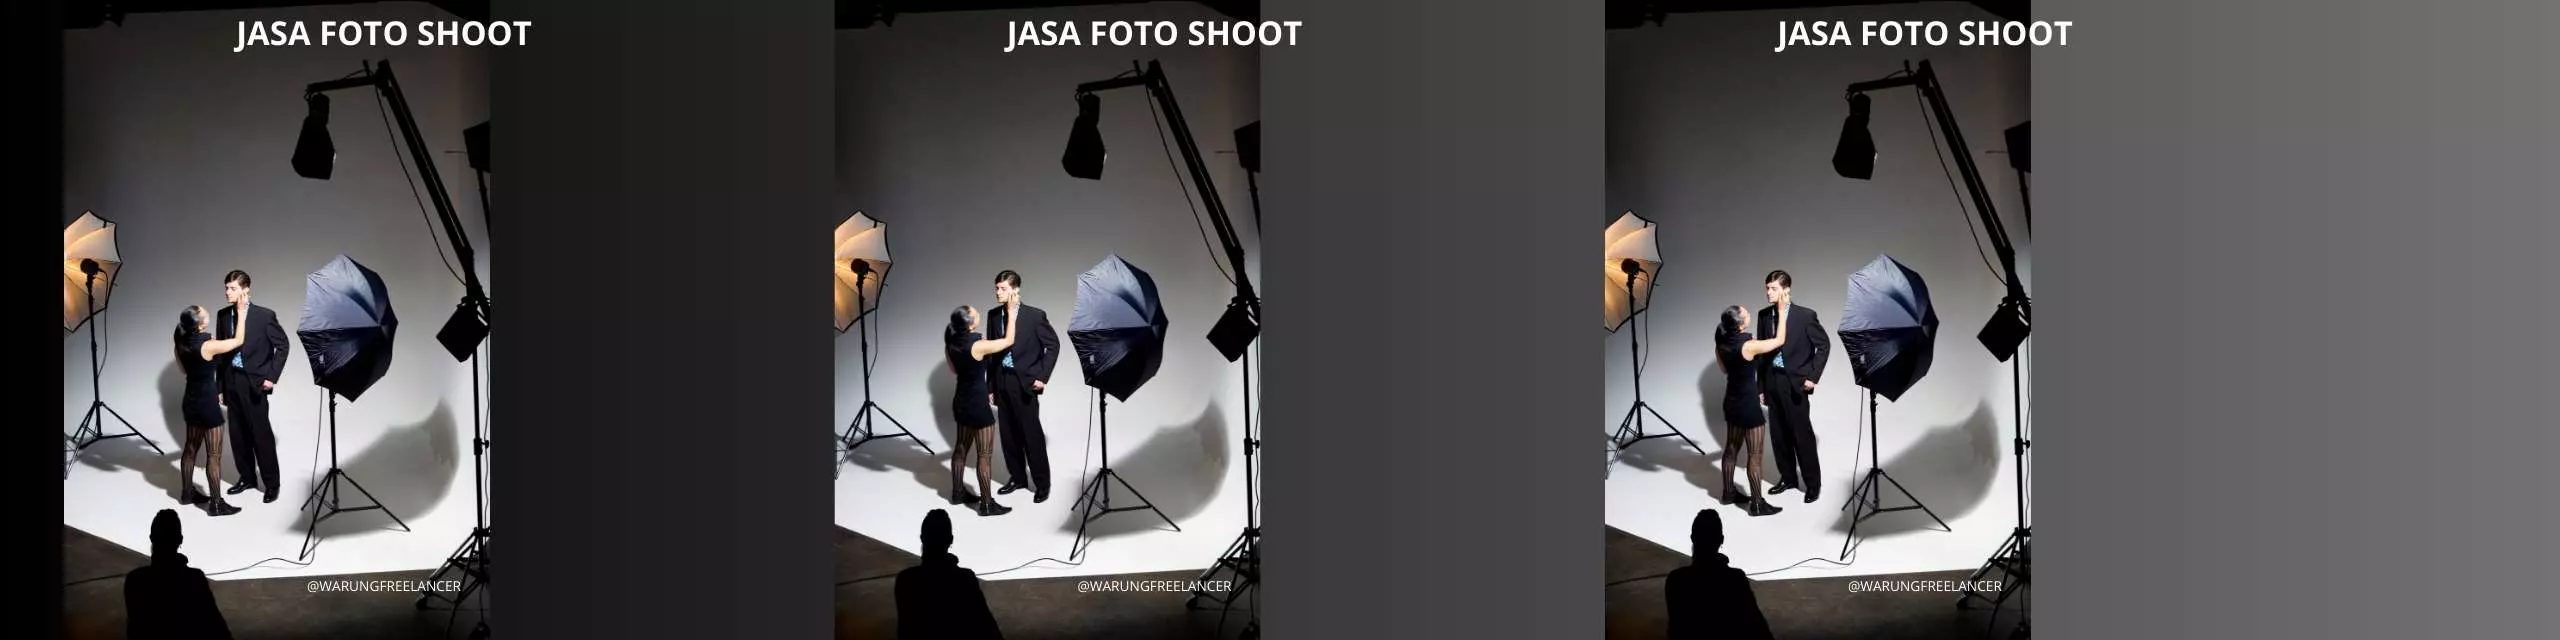 Jasa Foto Shoot